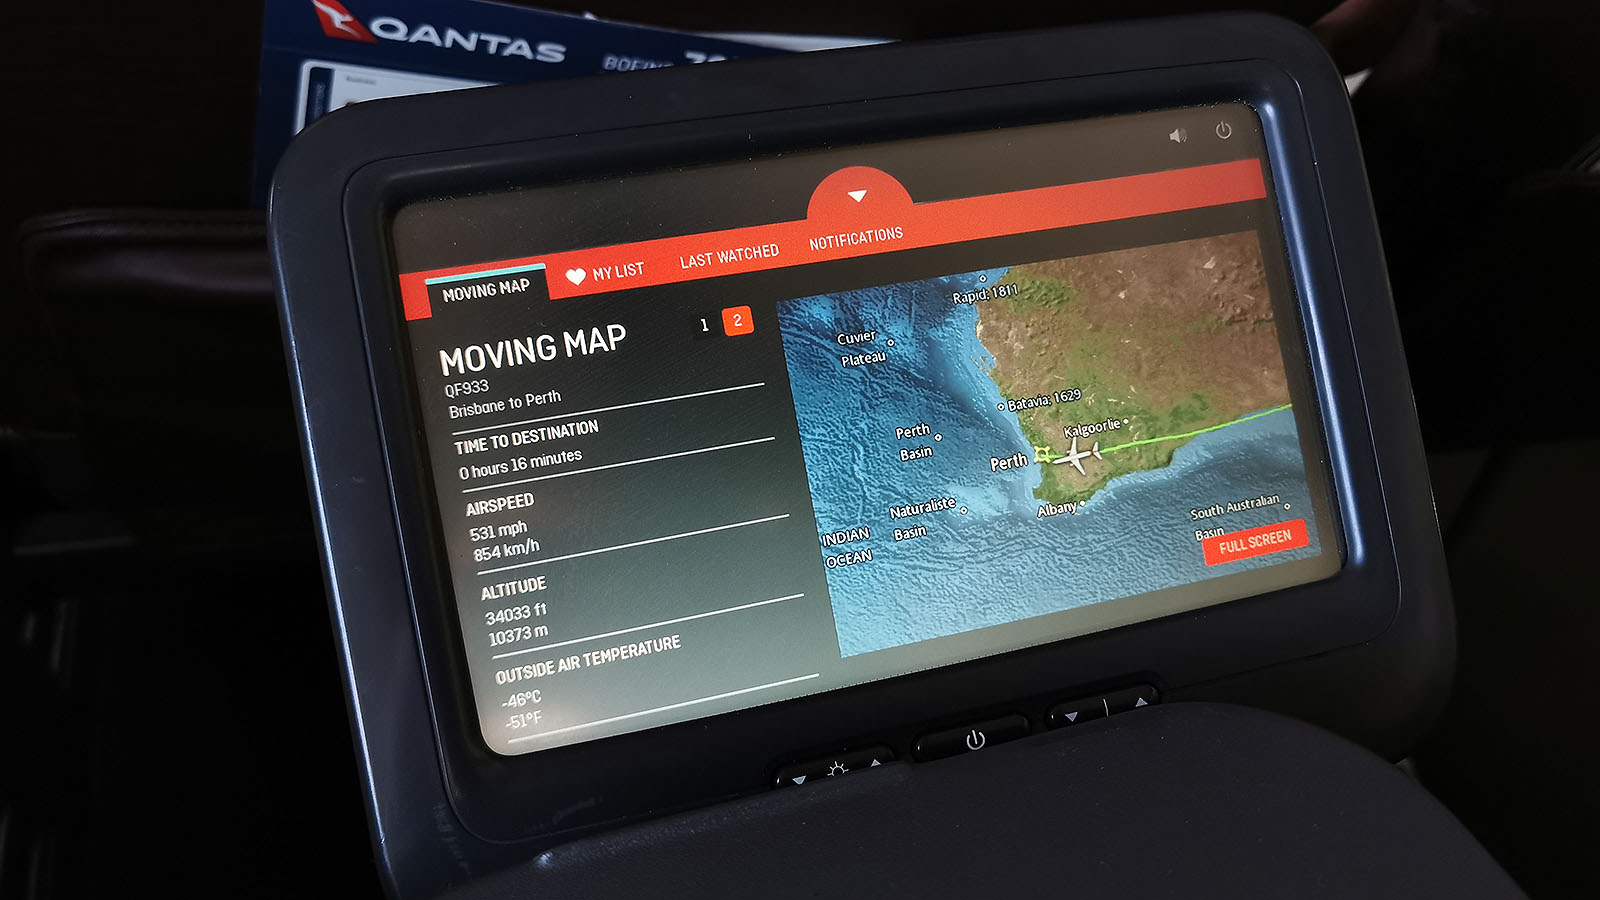 Qantas Boeing 737 Economy